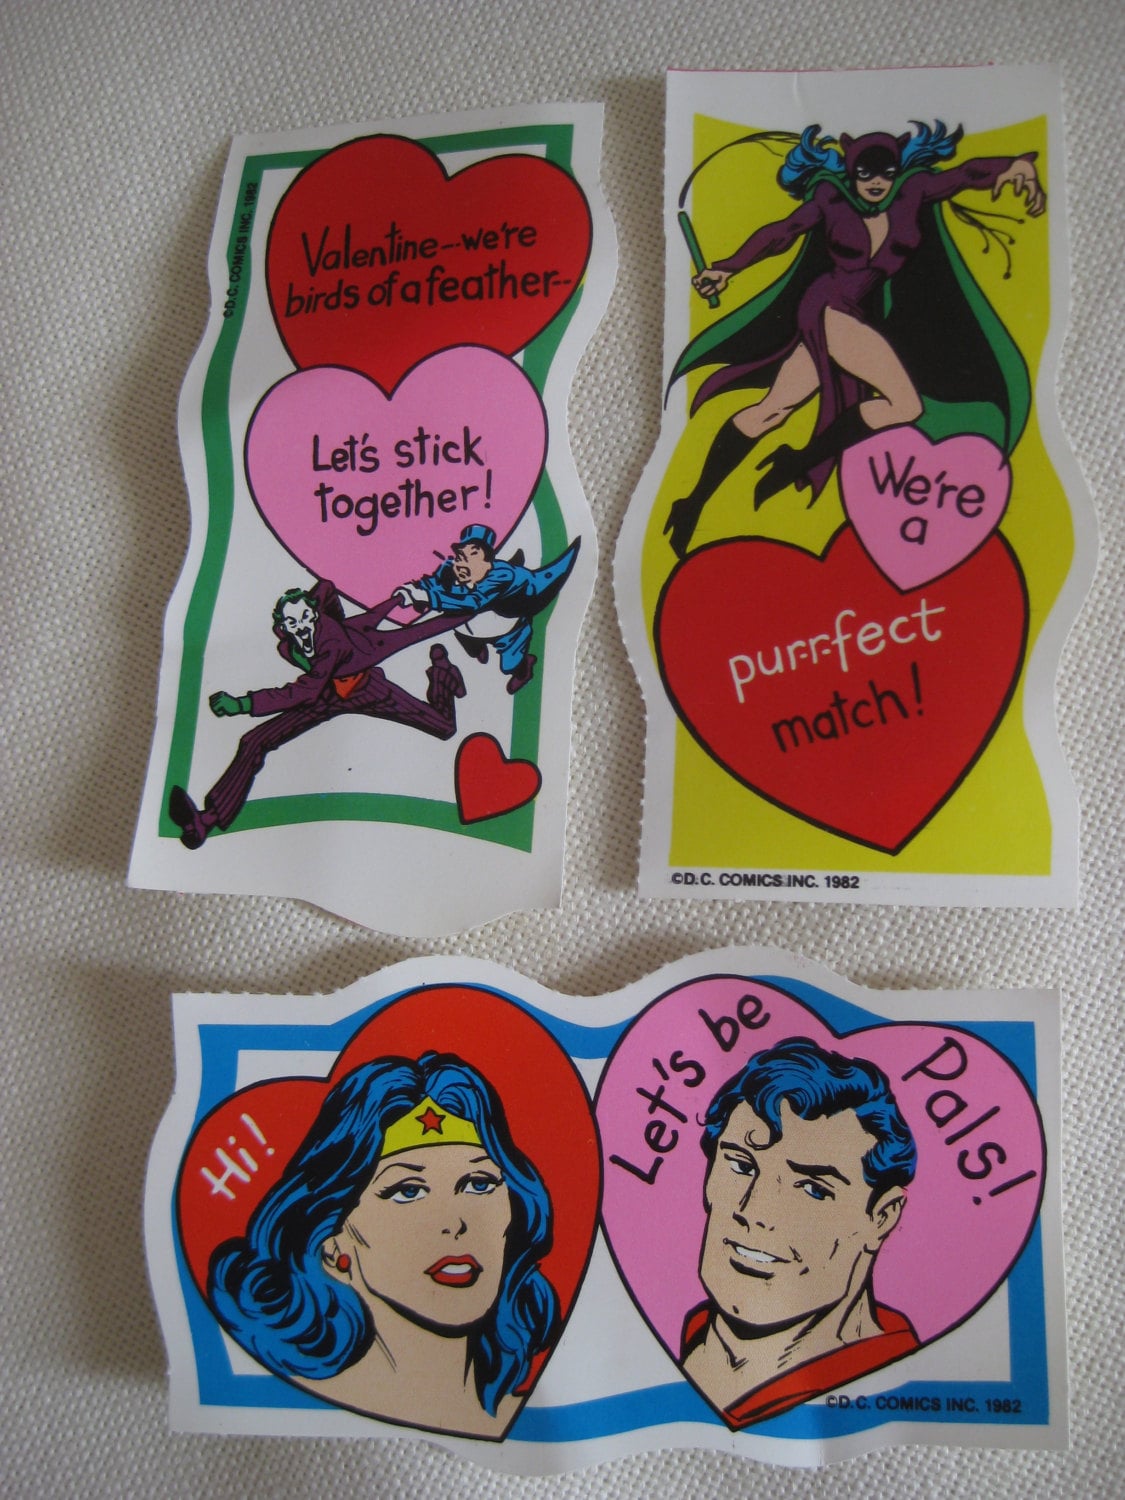 Superhero Valentines